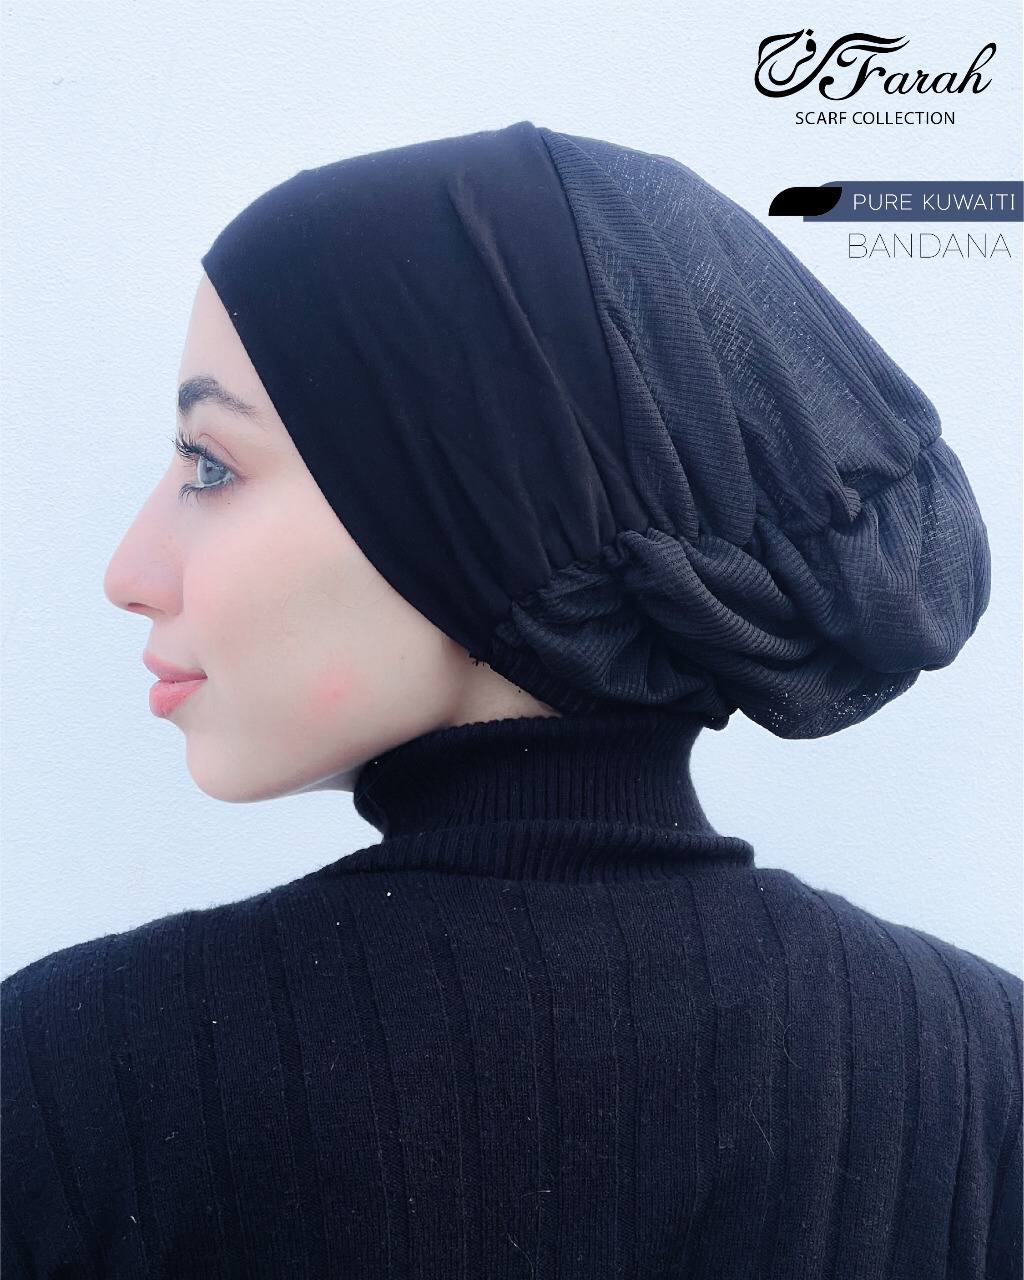 Elegant Cotton Hijab Frill Kuwaiti Bandana with Ruffles - Stylish Headscarf for Everyday Chic - Black